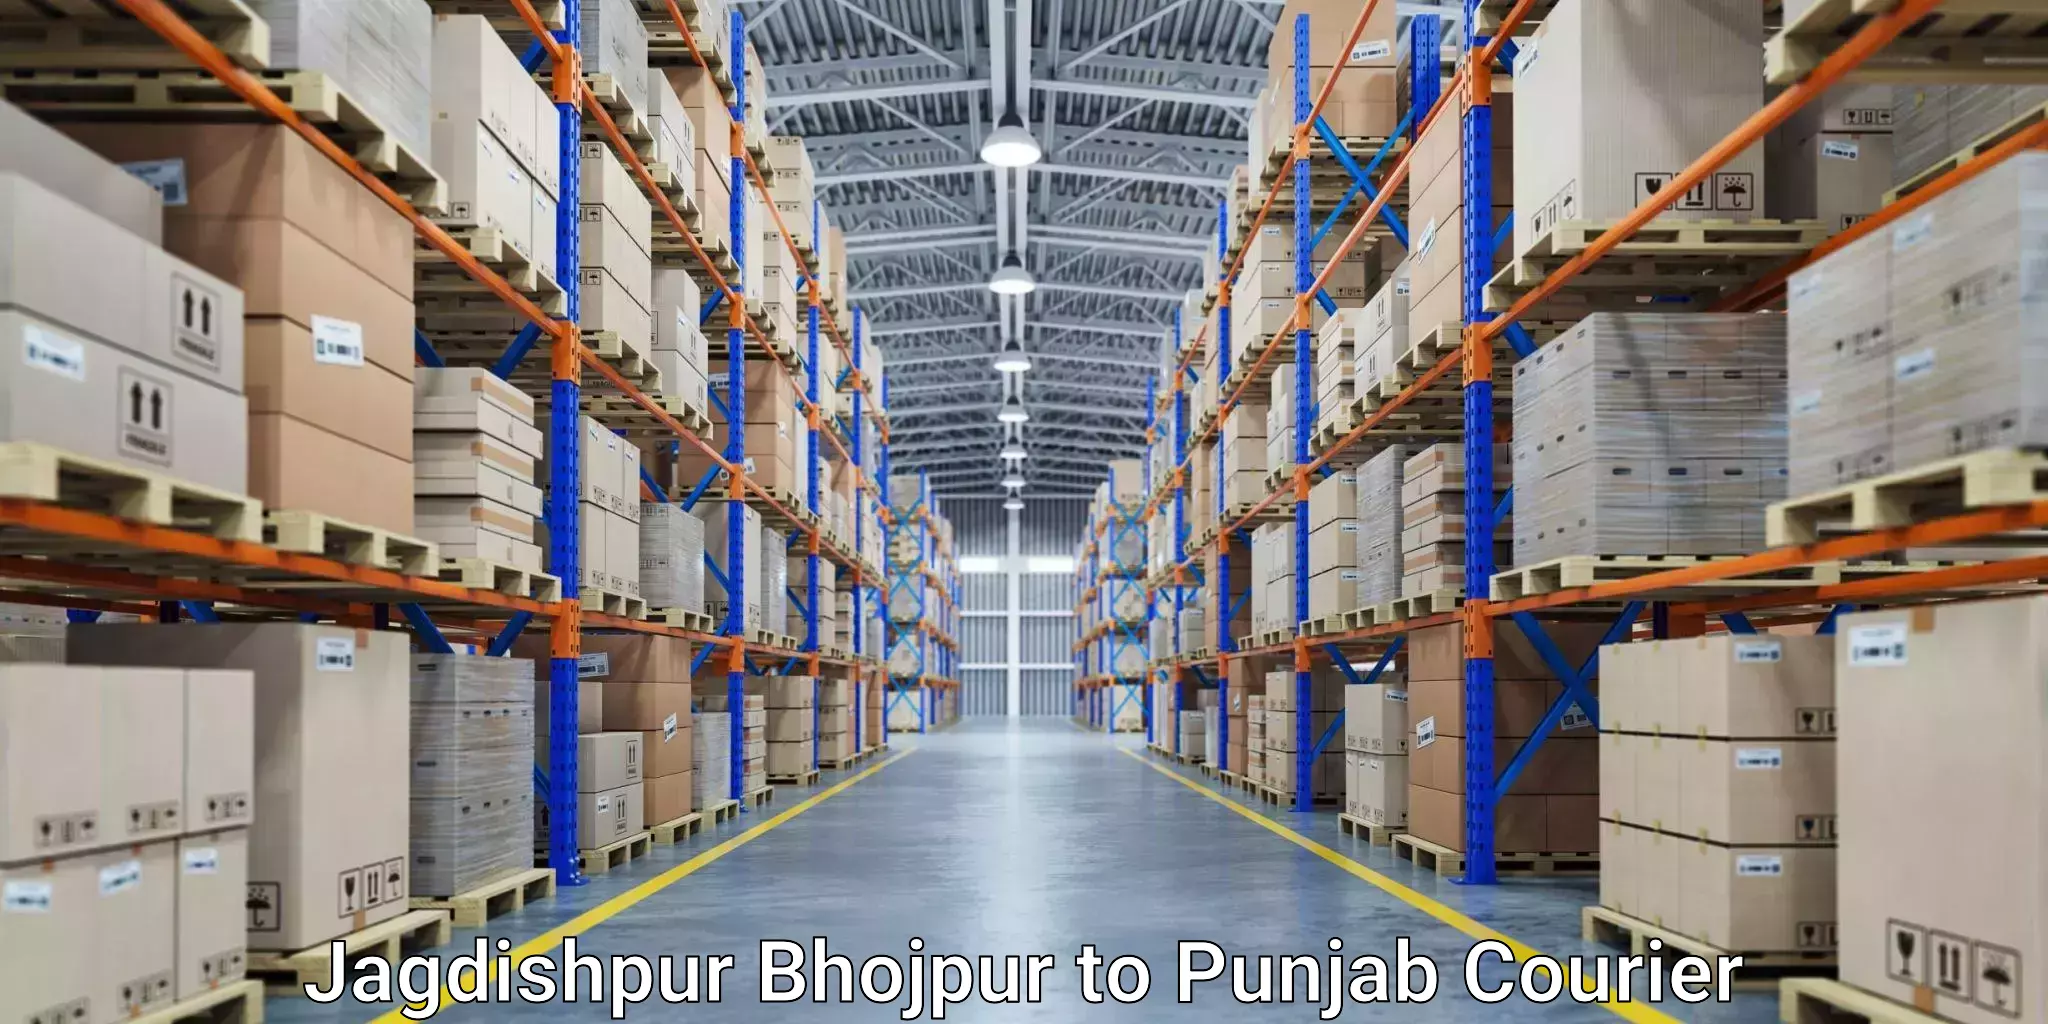 Courier service innovation Jagdishpur Bhojpur to Central University of Punjab Bathinda